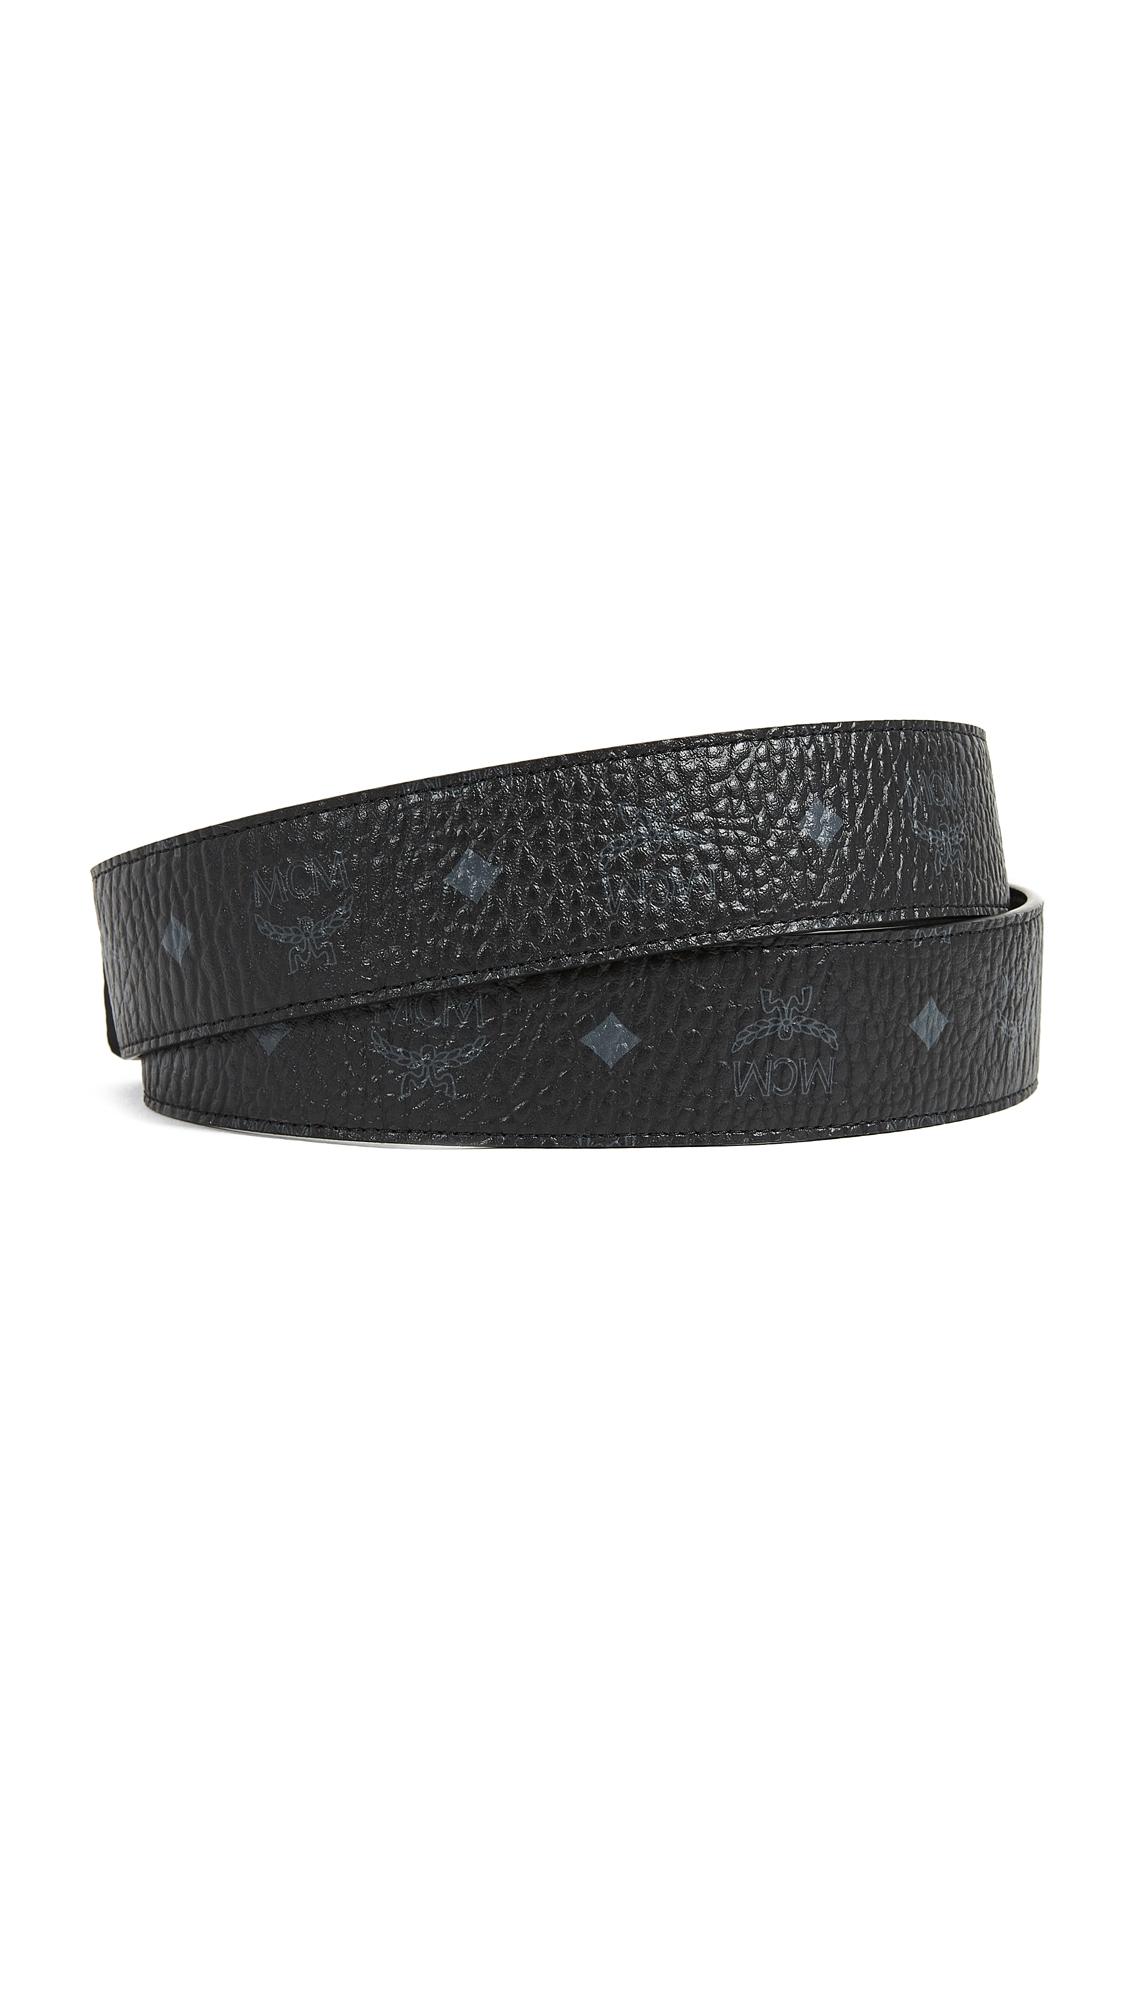 MCM Leather Gold M Buckle Reversible Belt in Black for Men - Lyst